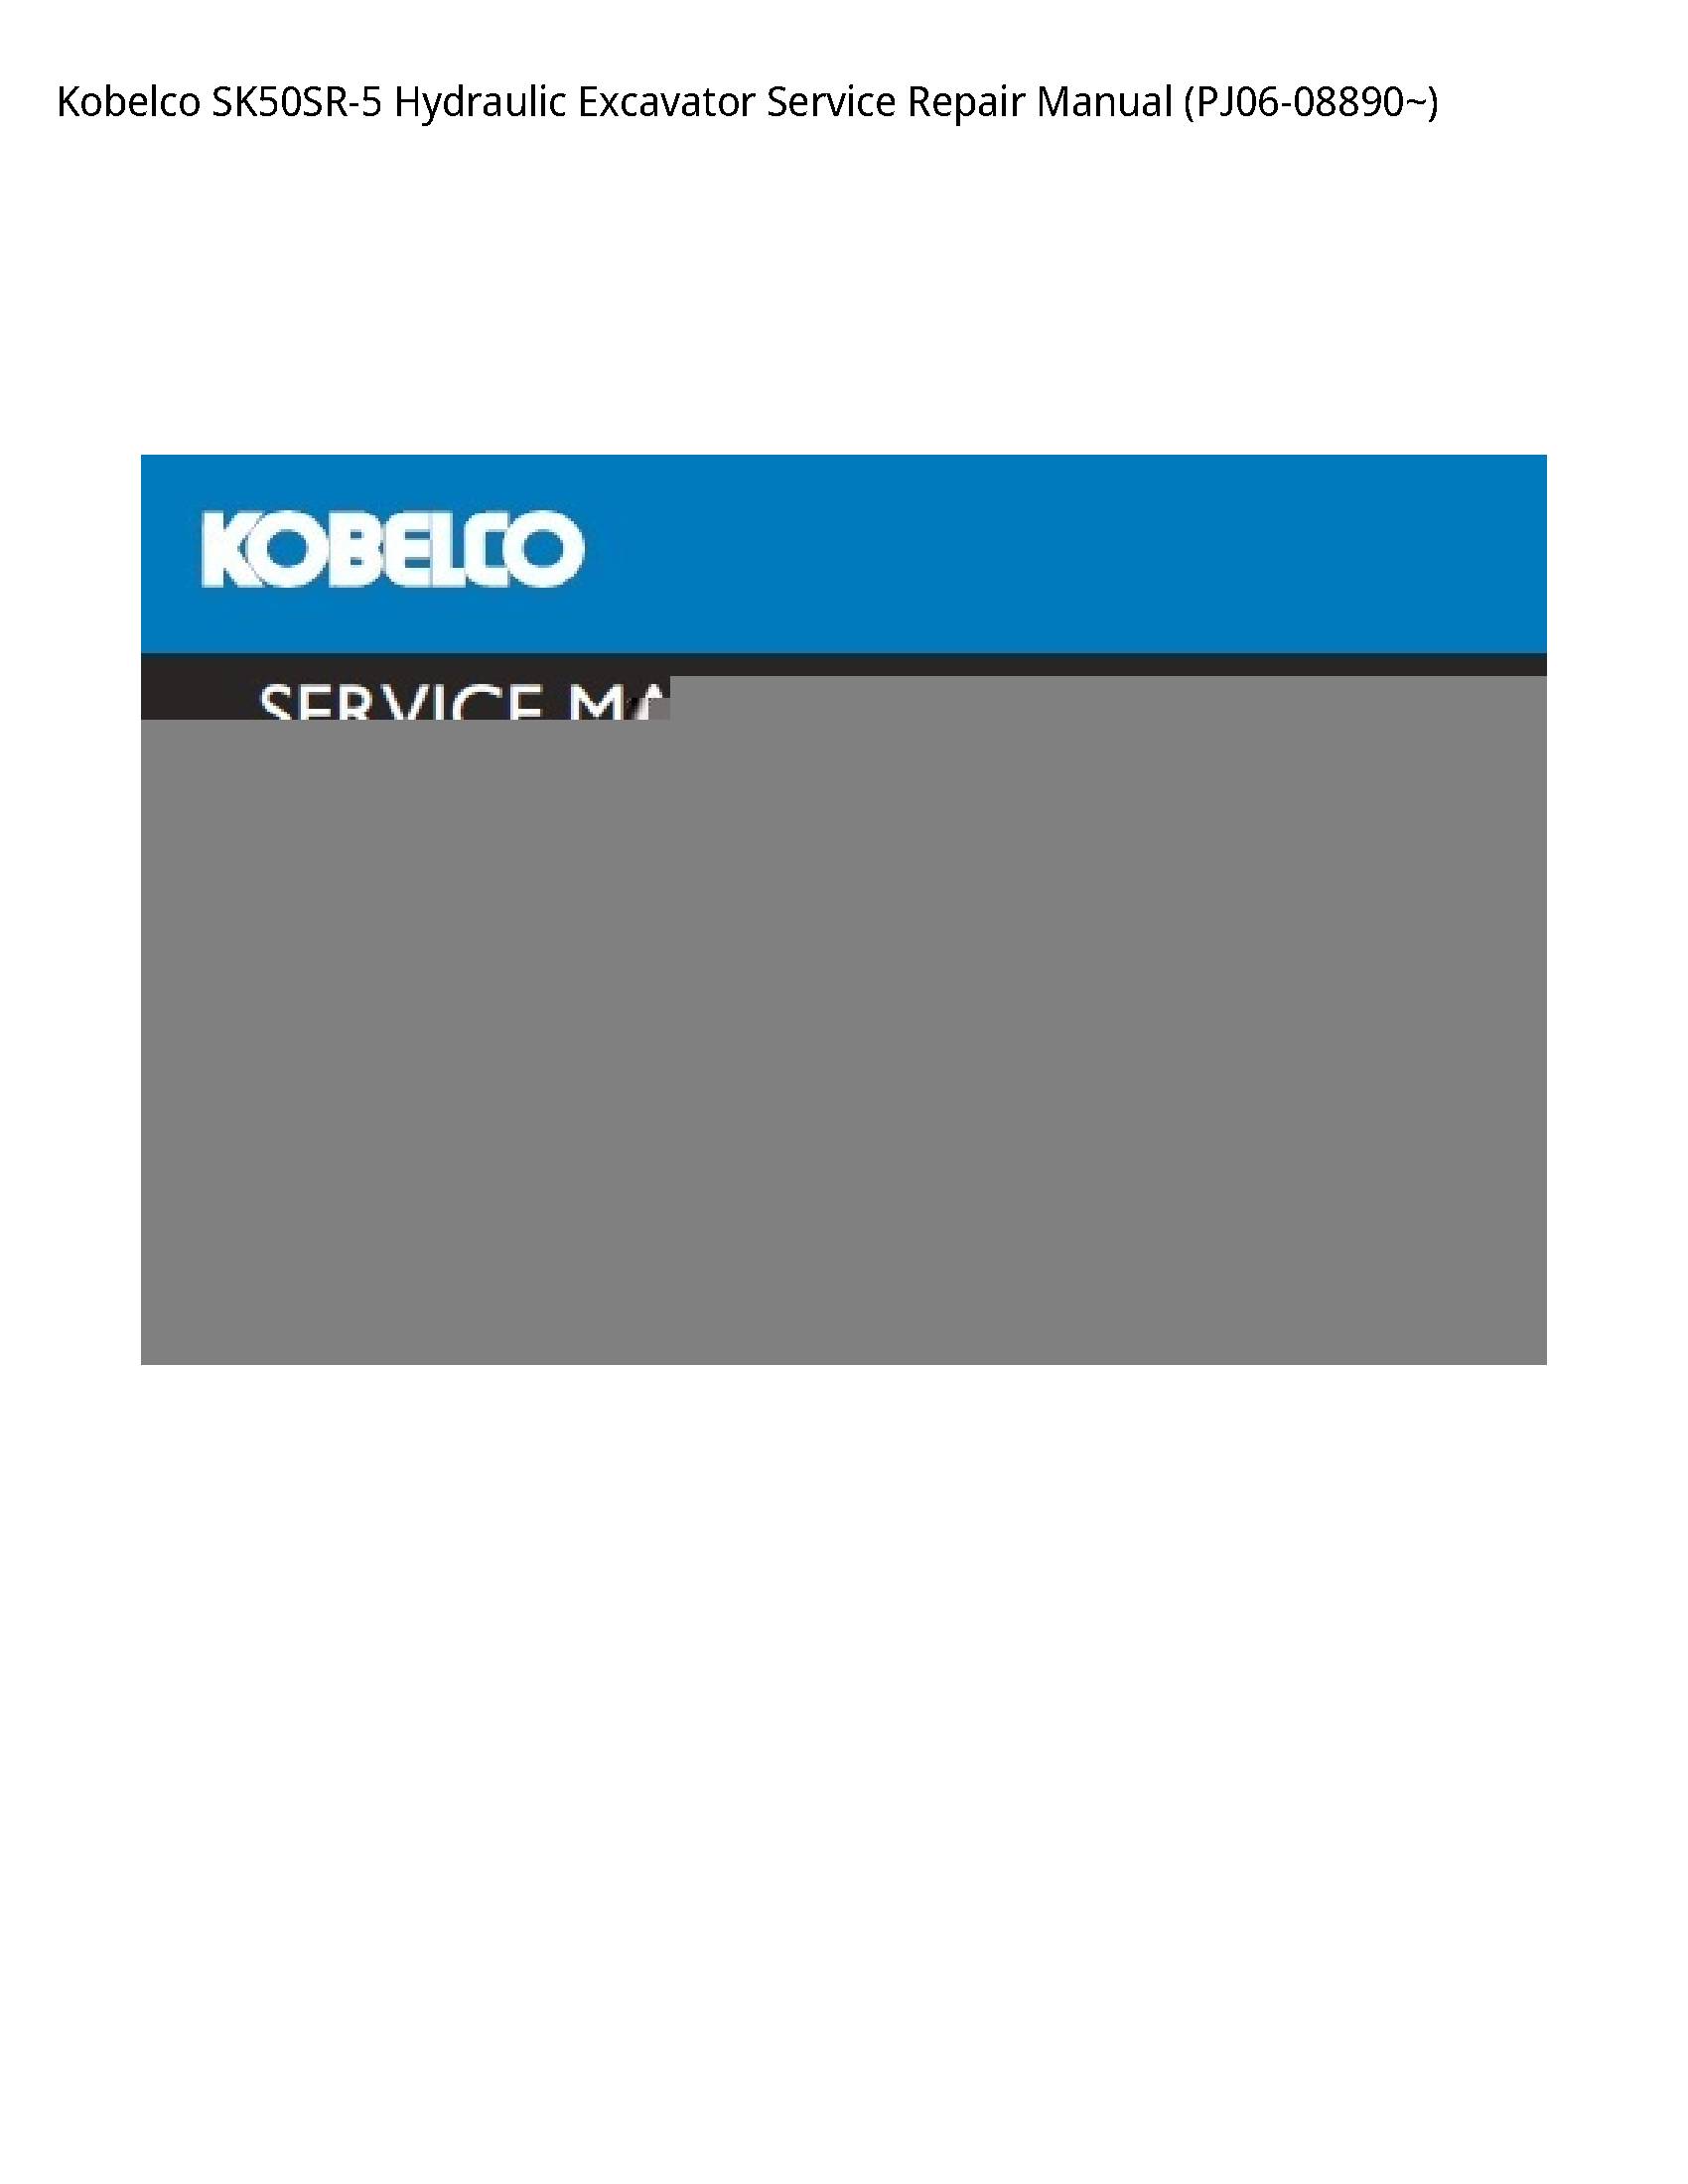 Kobelco SK50SR-5 Hydraulic Excavator manual